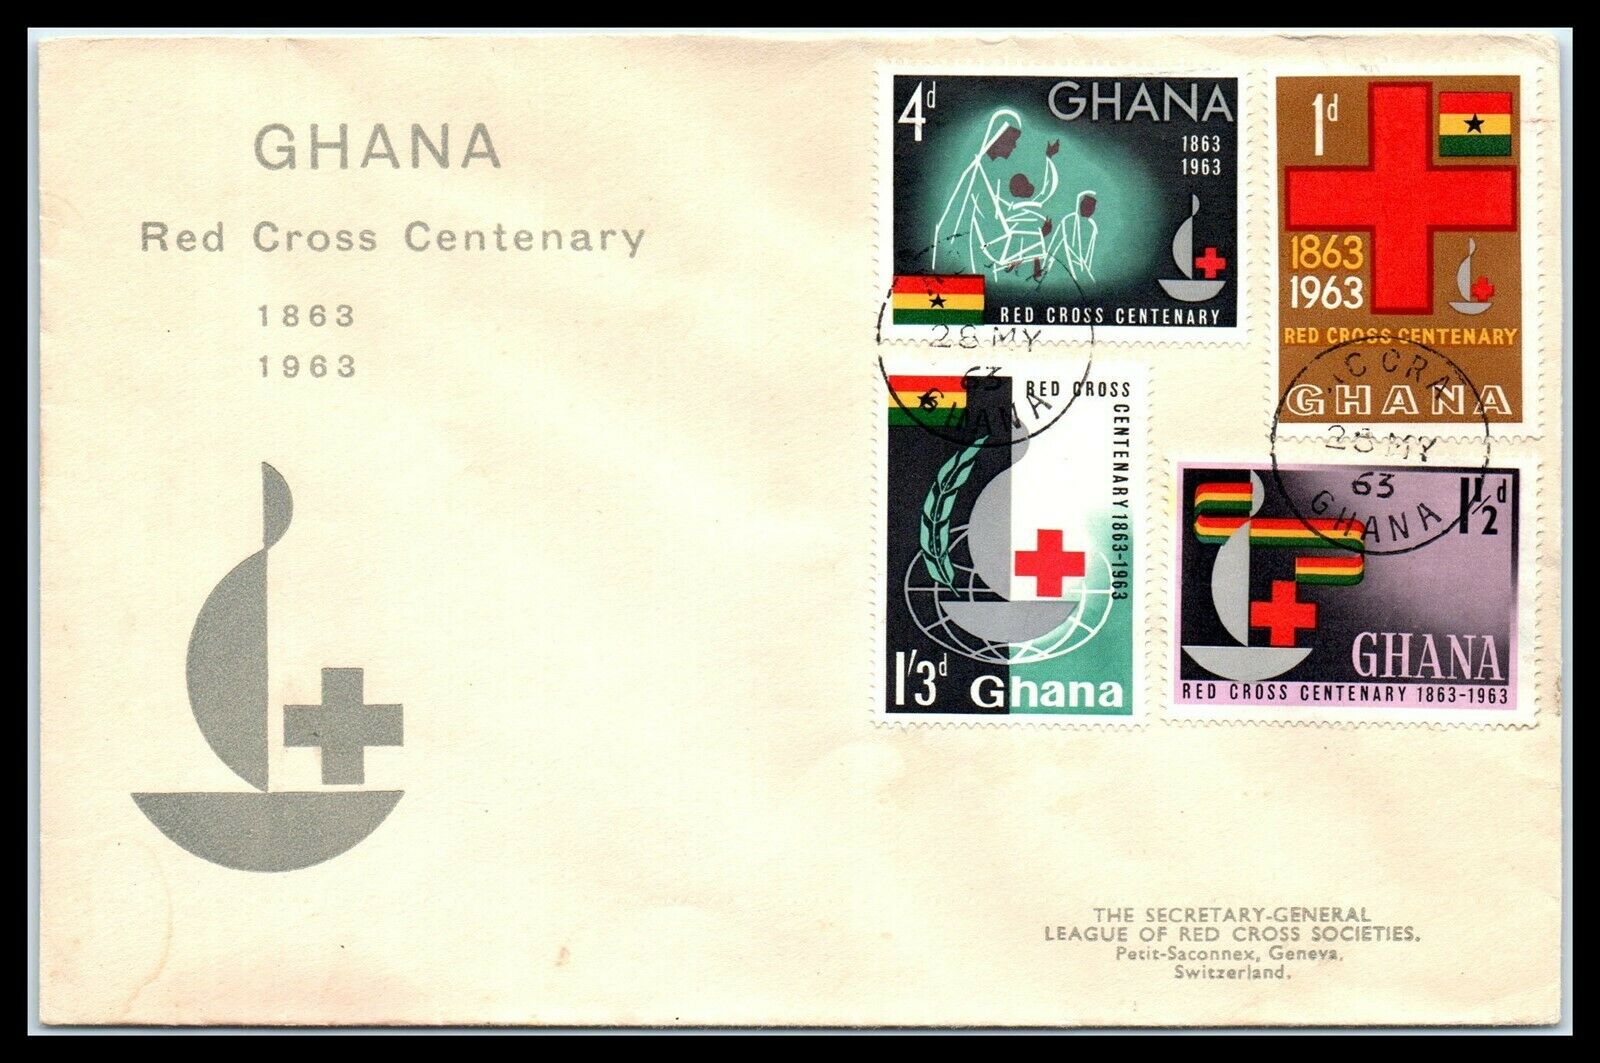 1963 Ghana Cover - Red Cross Centenary, Accra N14